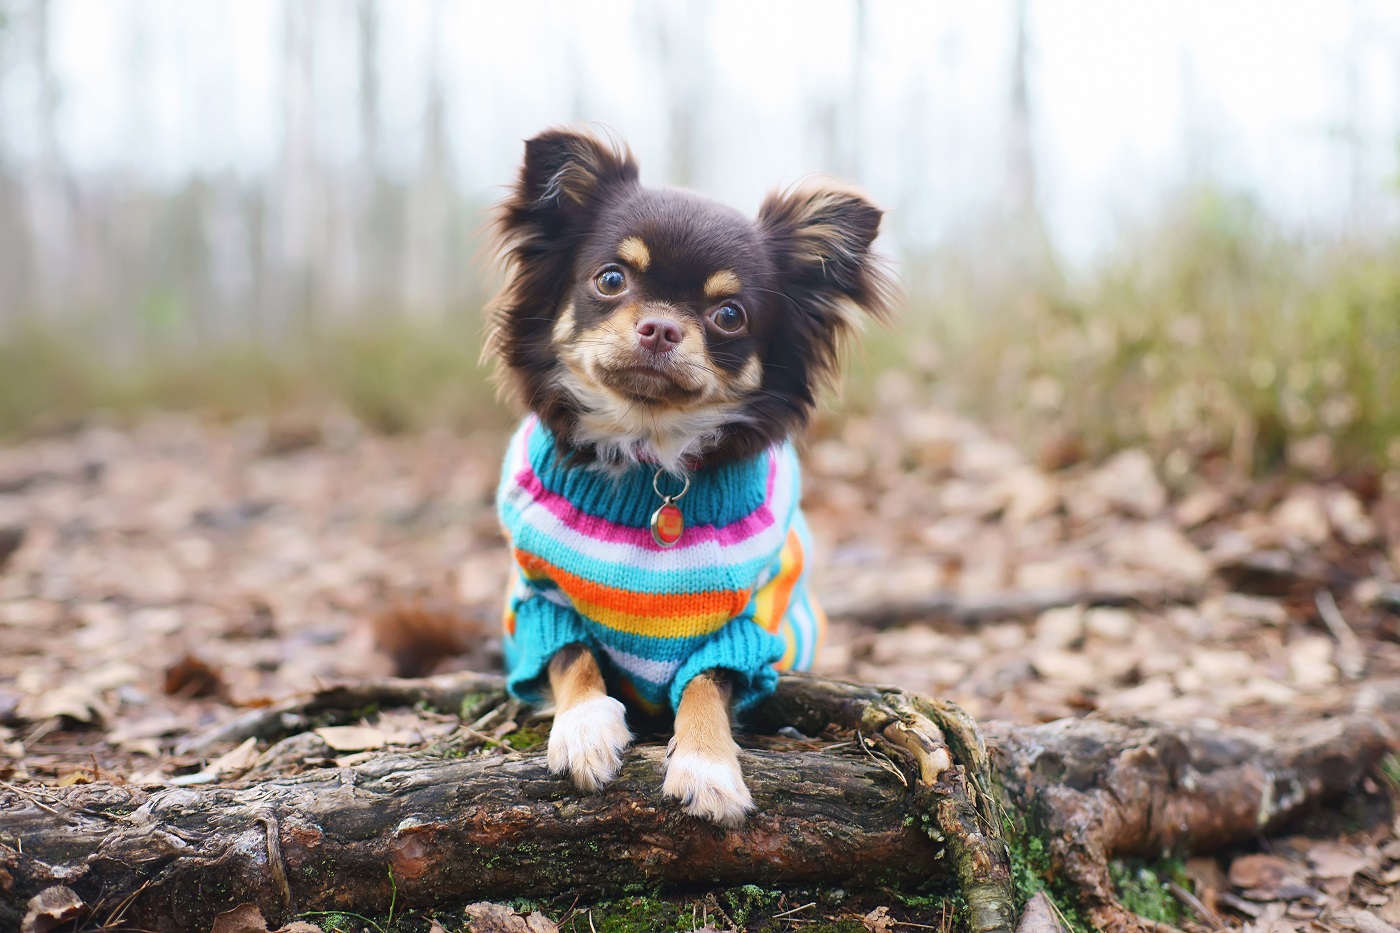 hihuahua mit einem DIY Hundepullover im Wald